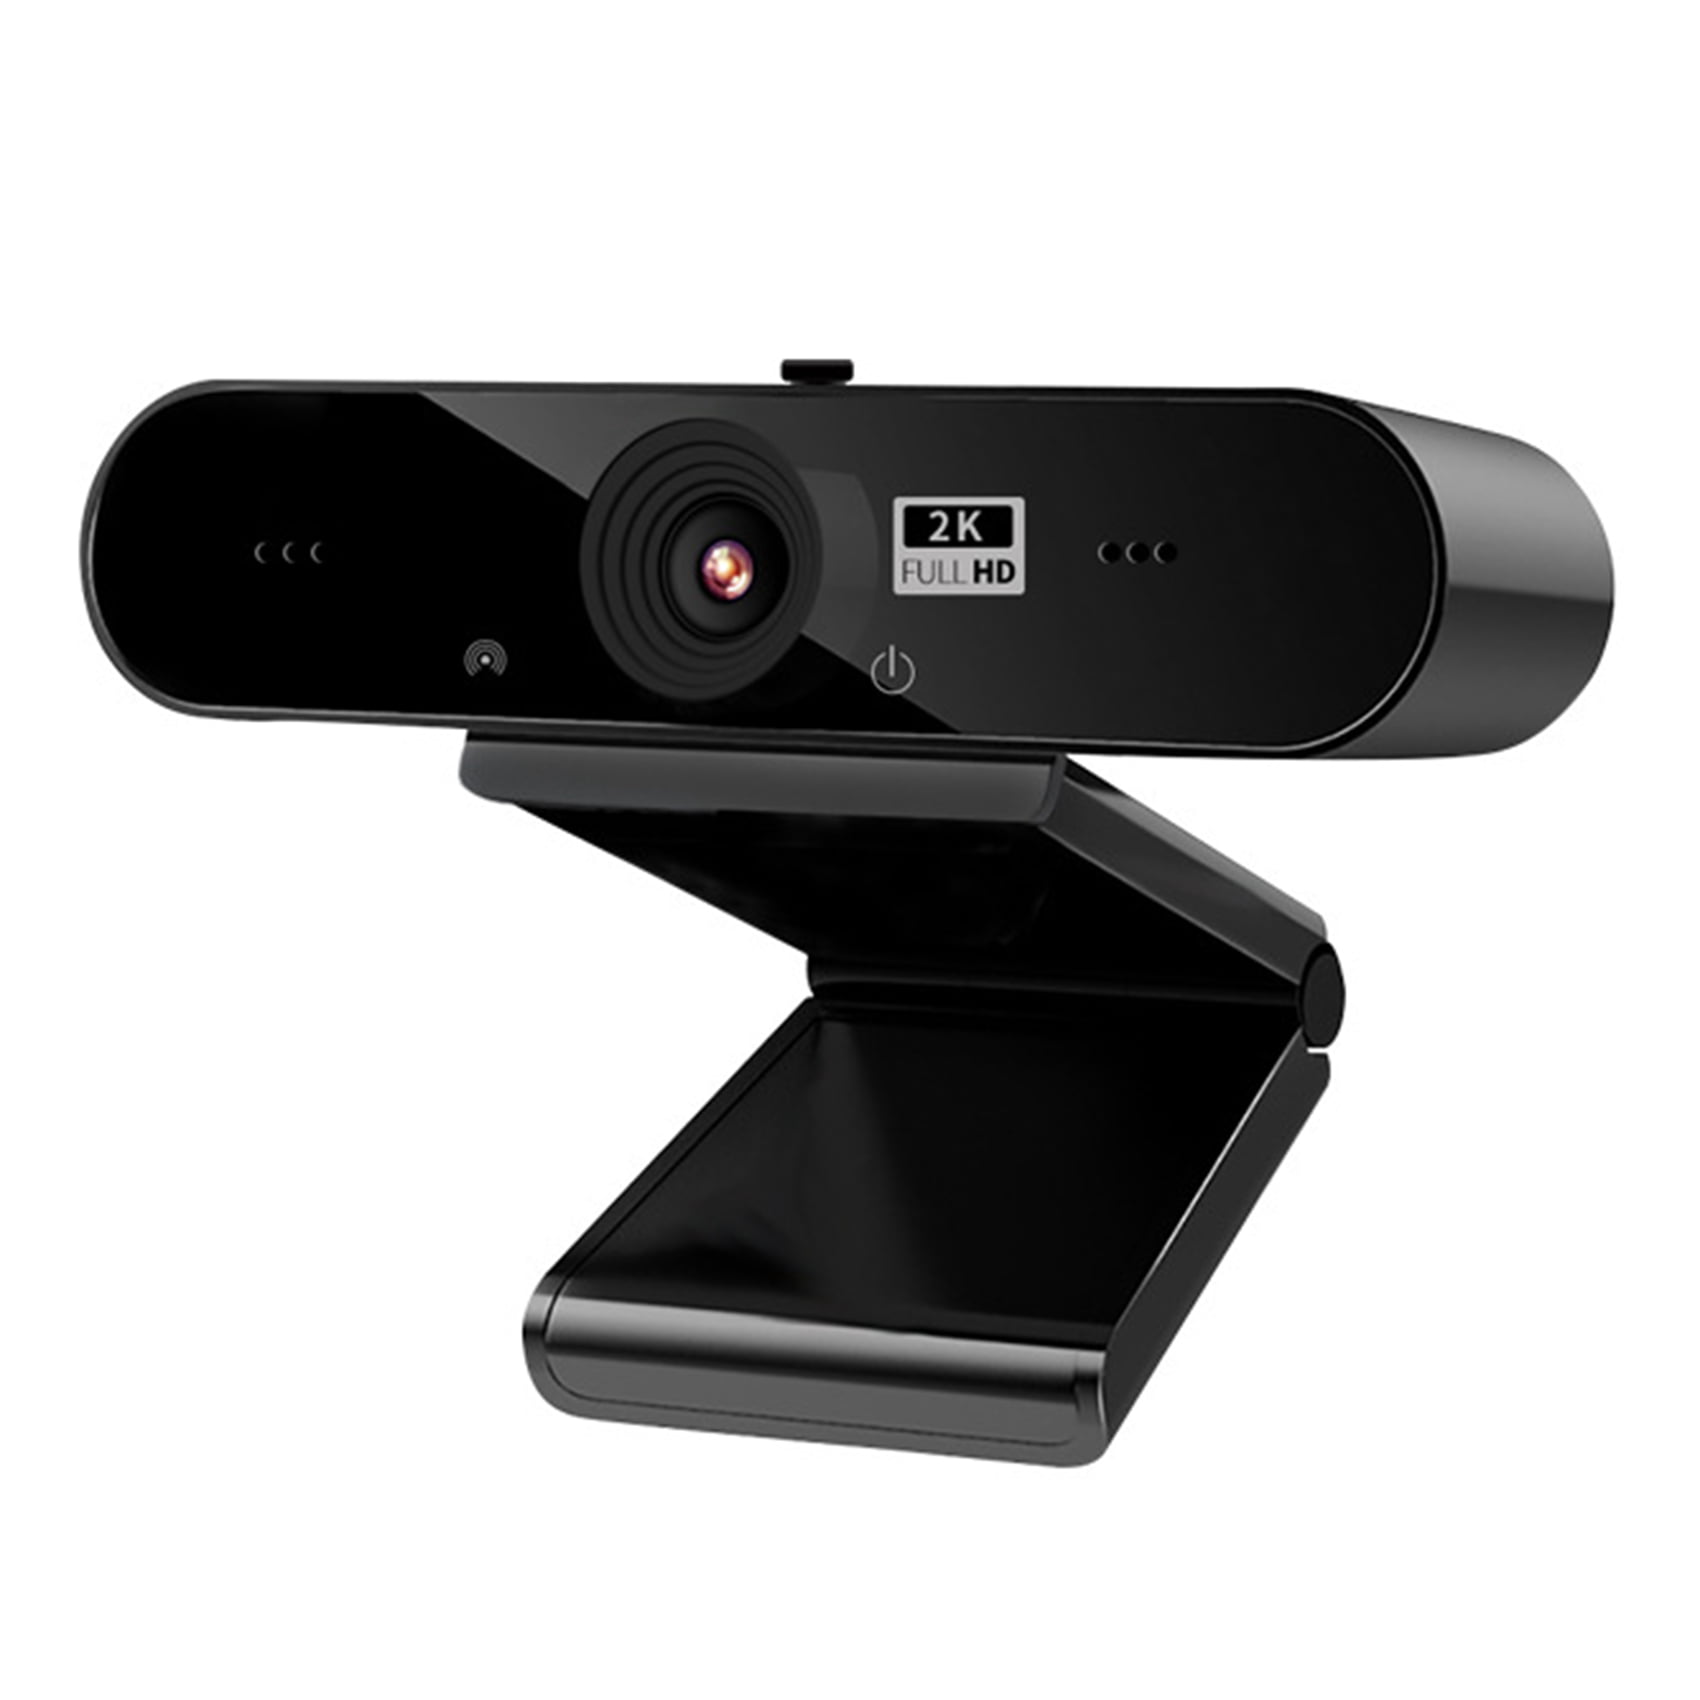 eMeet Nova AutoFocus HD Webcam 96°View Web Camera w/ 2 De-Noise Mics for Laptop/Desktop Plug & Play USB Streaming Computer Camera for Conference/Calling/Teaching/Gaming 1080P Webcam with Microphone 